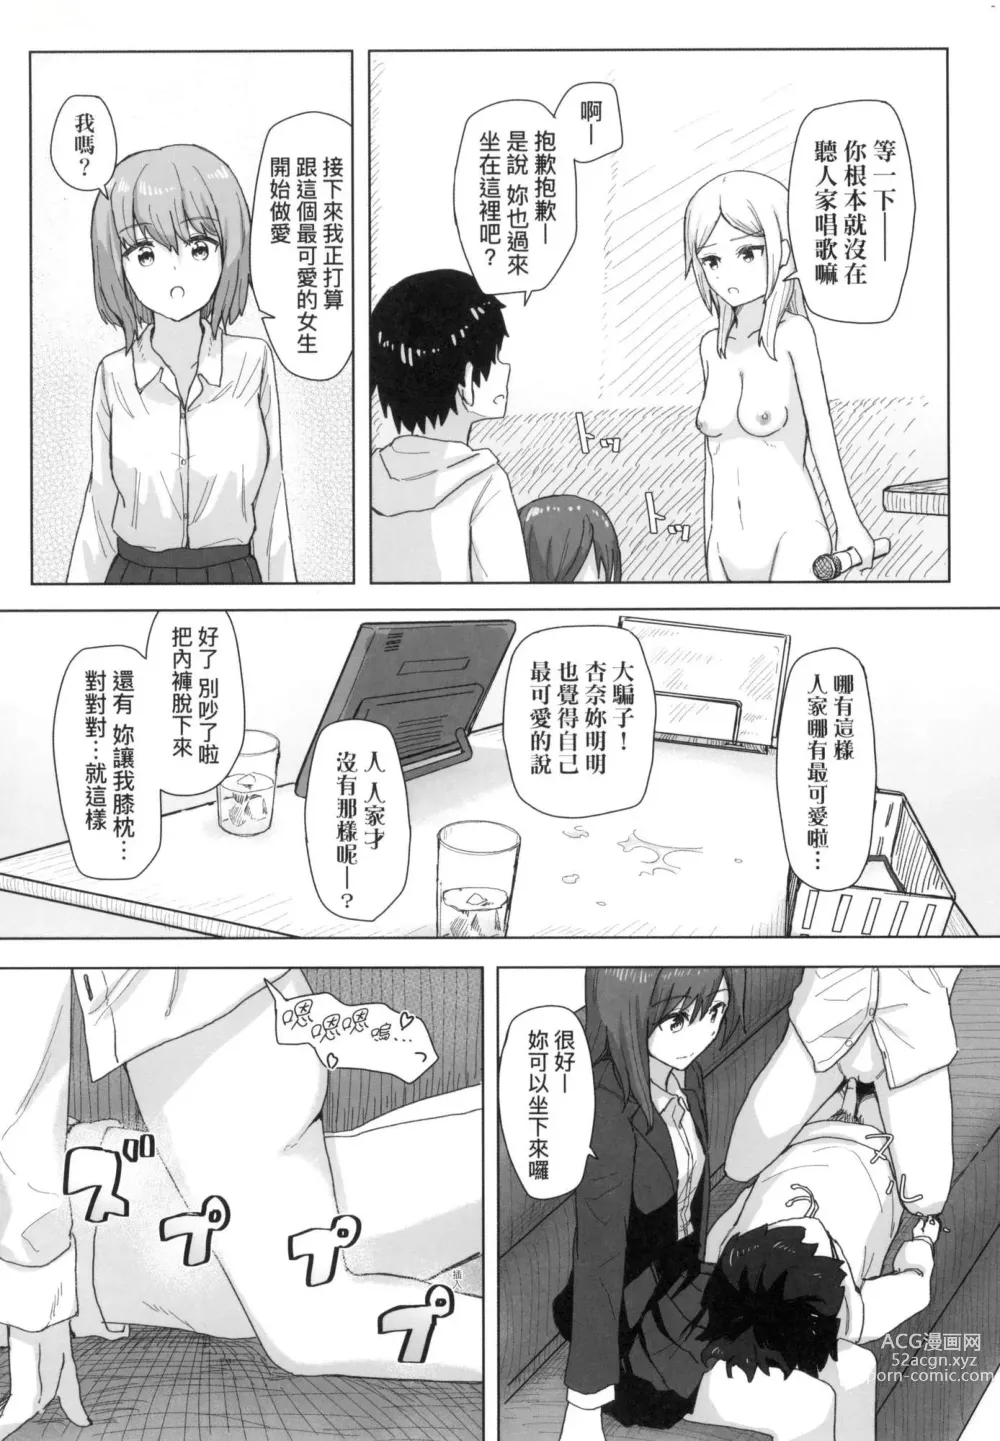 Page 24 of manga 常識改變活動紀錄 (decensored)